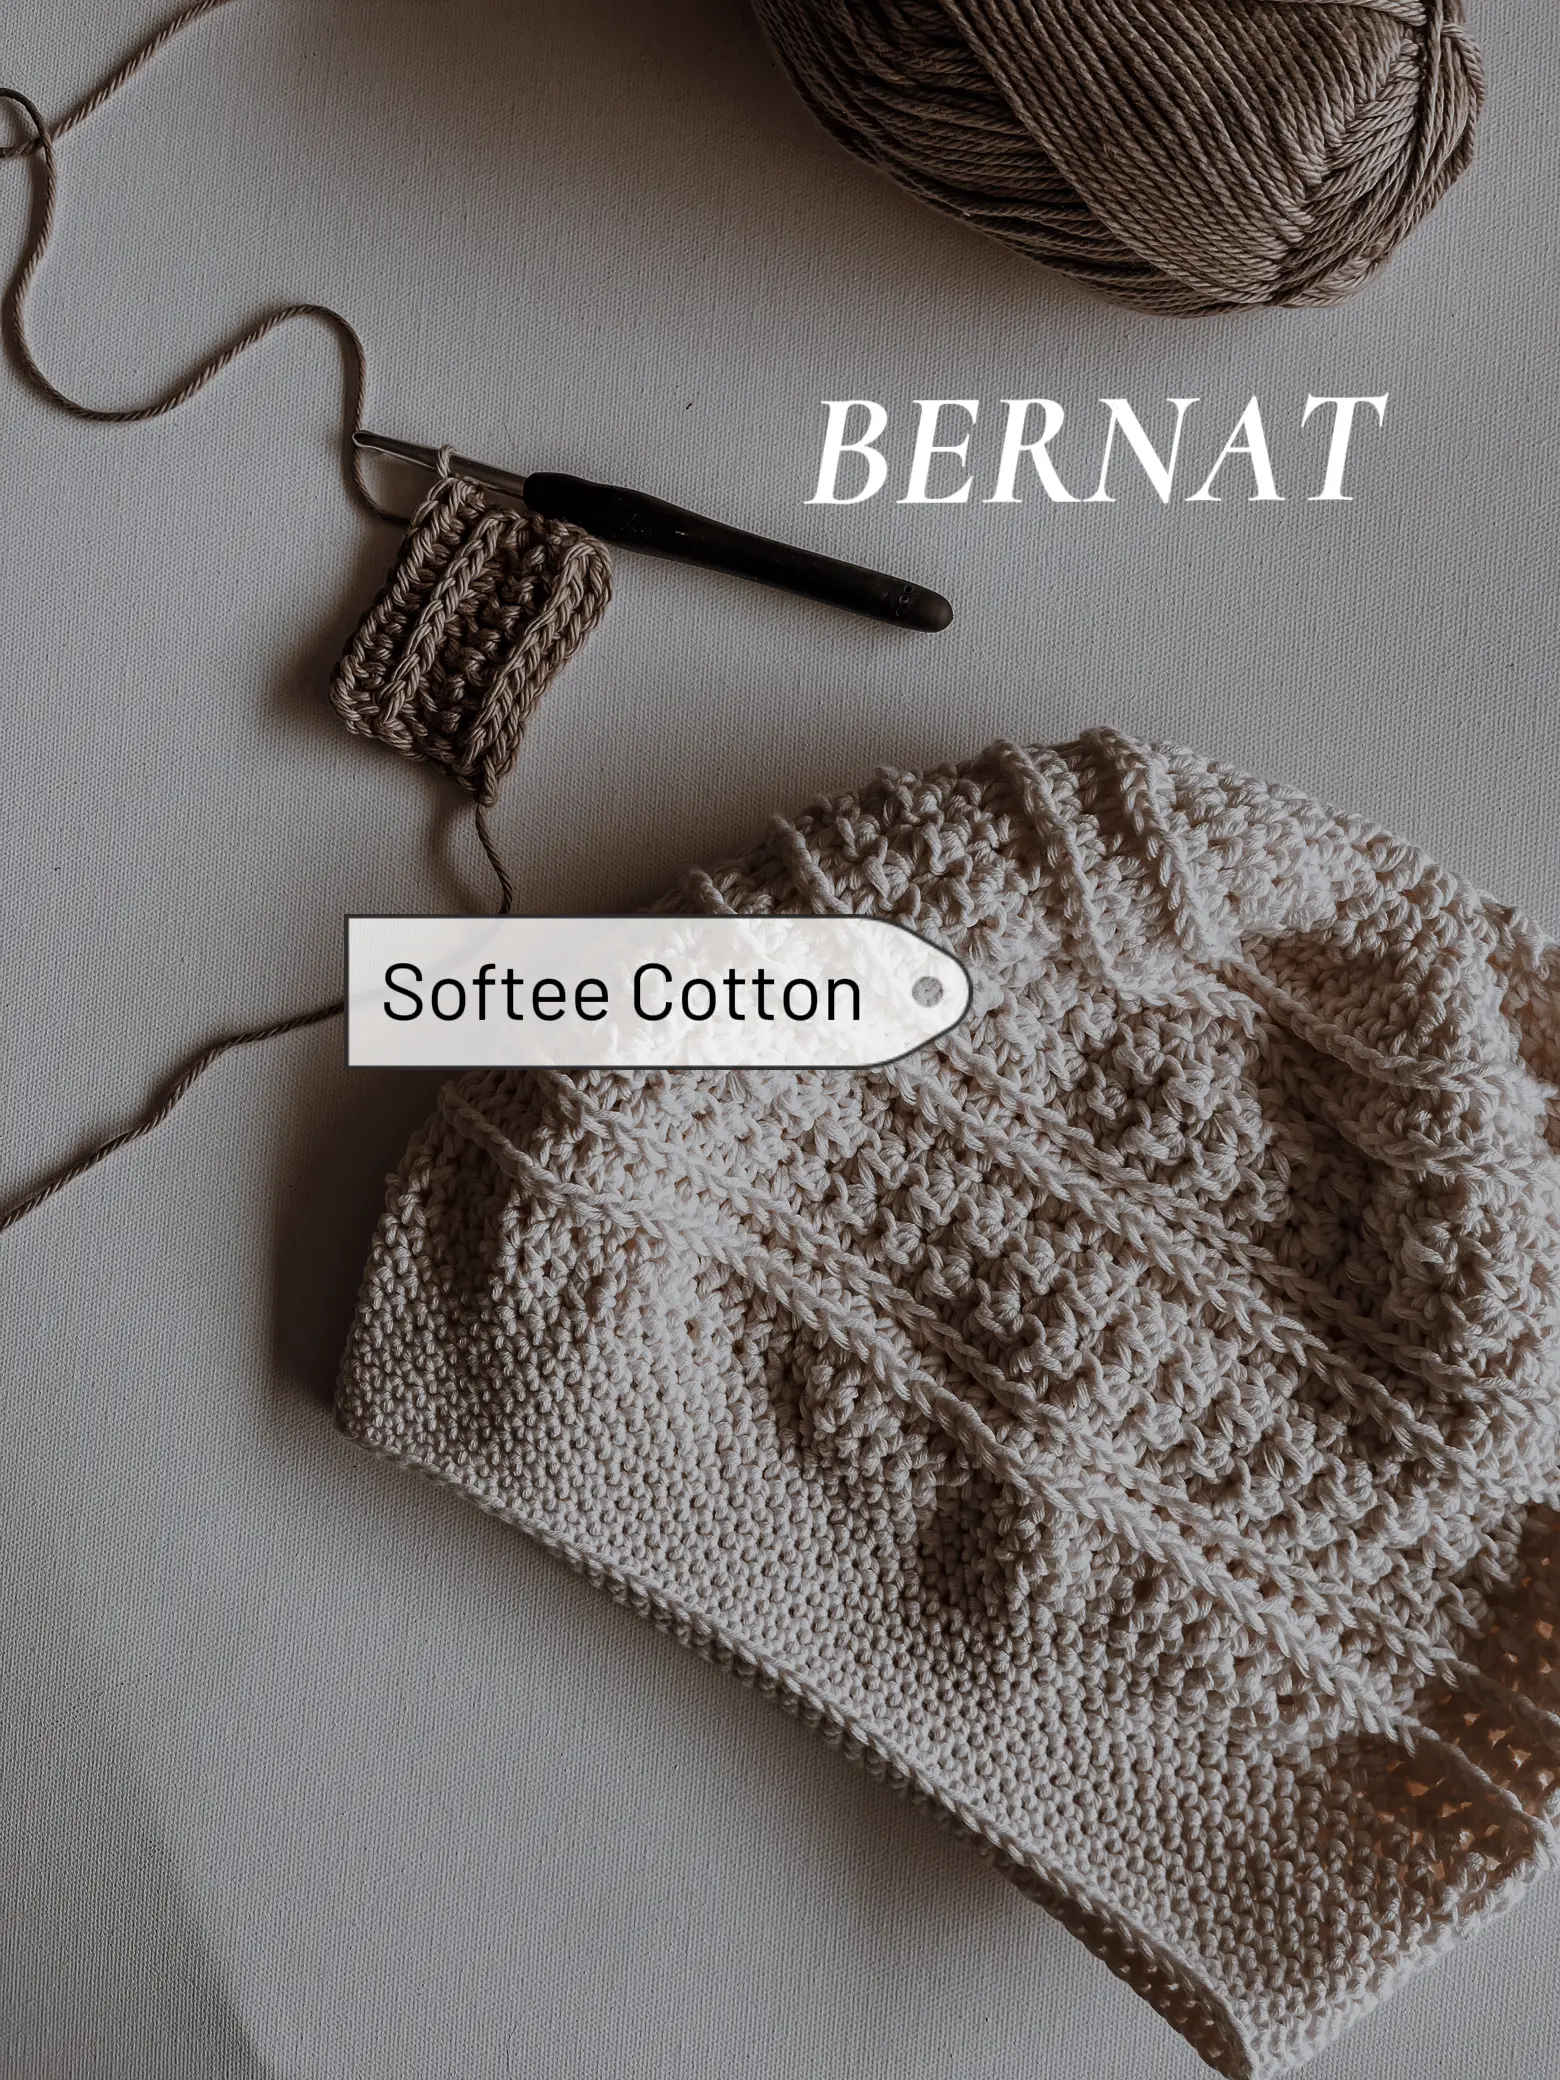 popular yarn brands among crocheters - Lemon8 Search